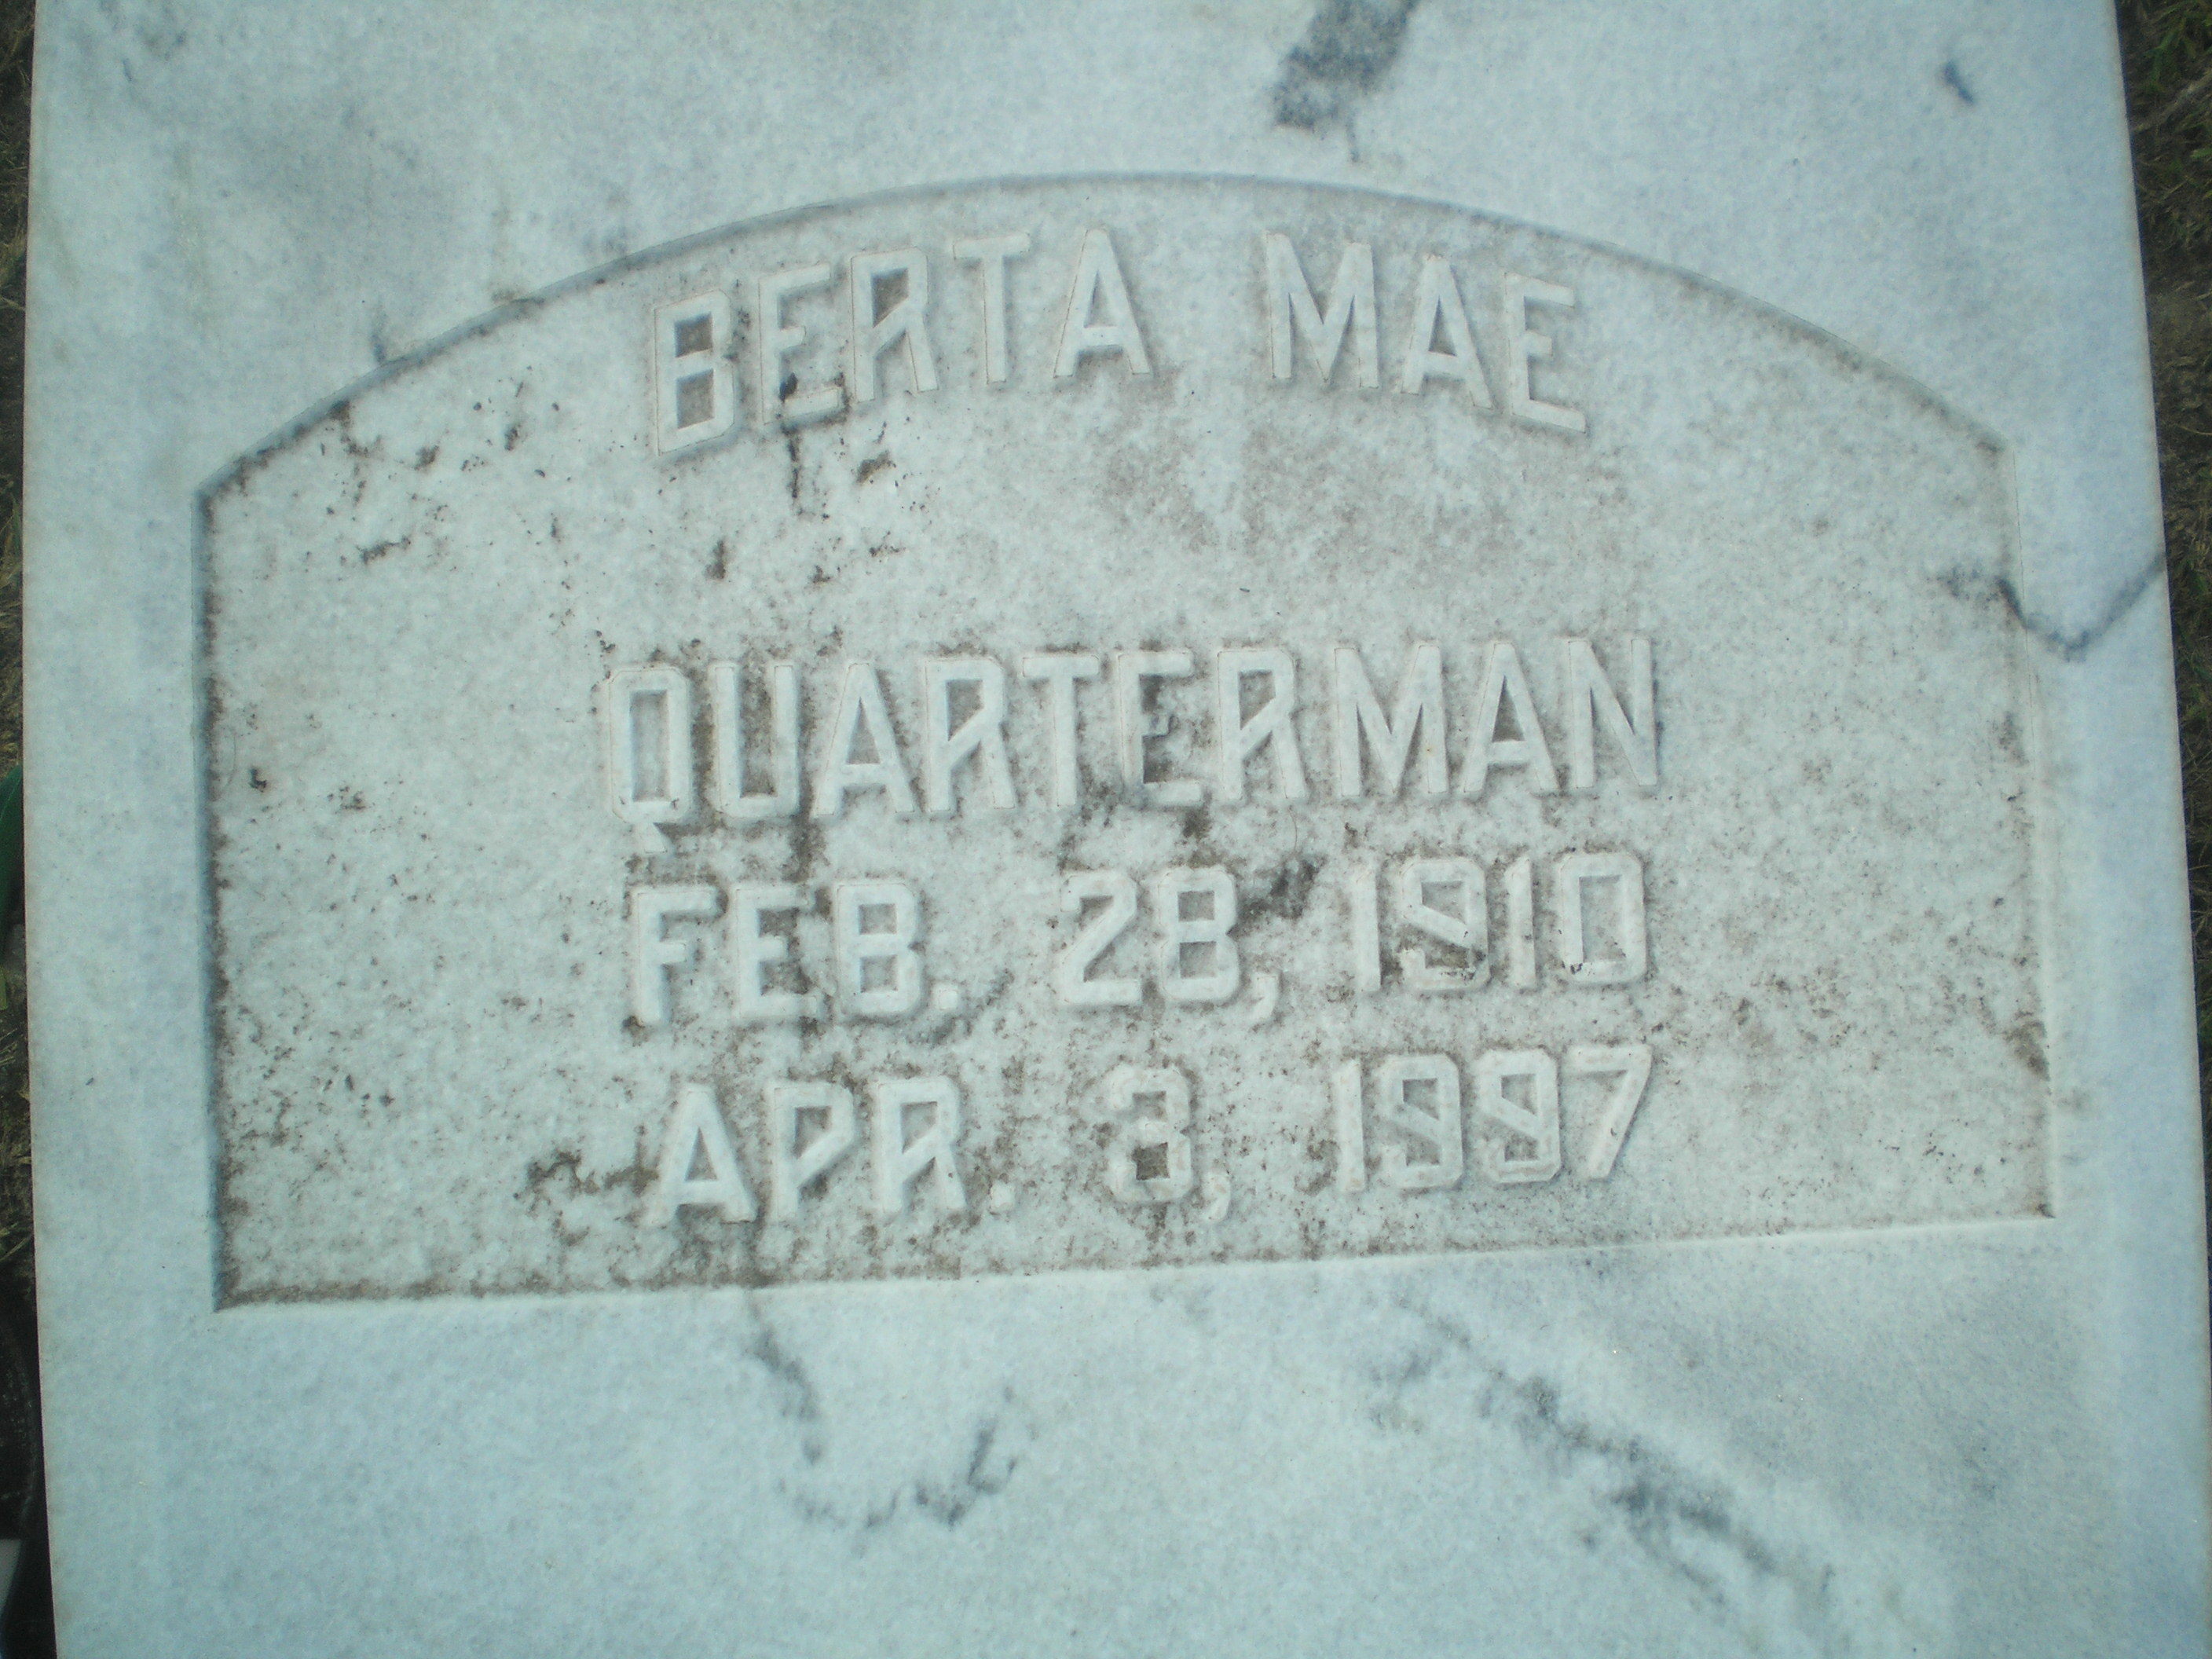 Berta Mae Quarterman Feb. 28, 1910 Apr. 3, 1997